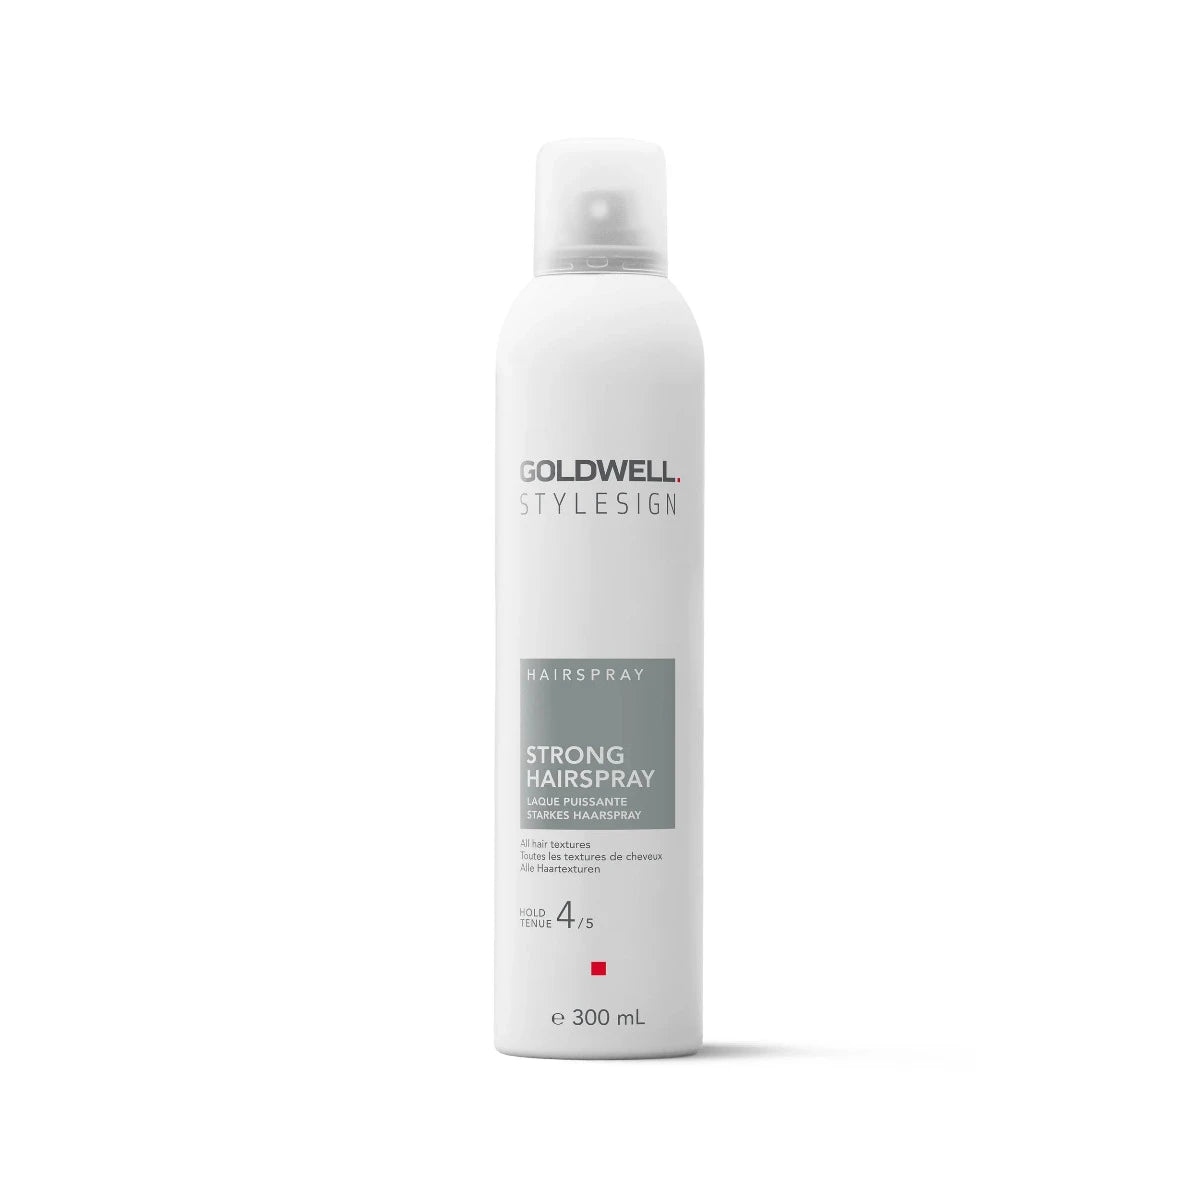 Goldwell StyleSign - Strong Hairspray